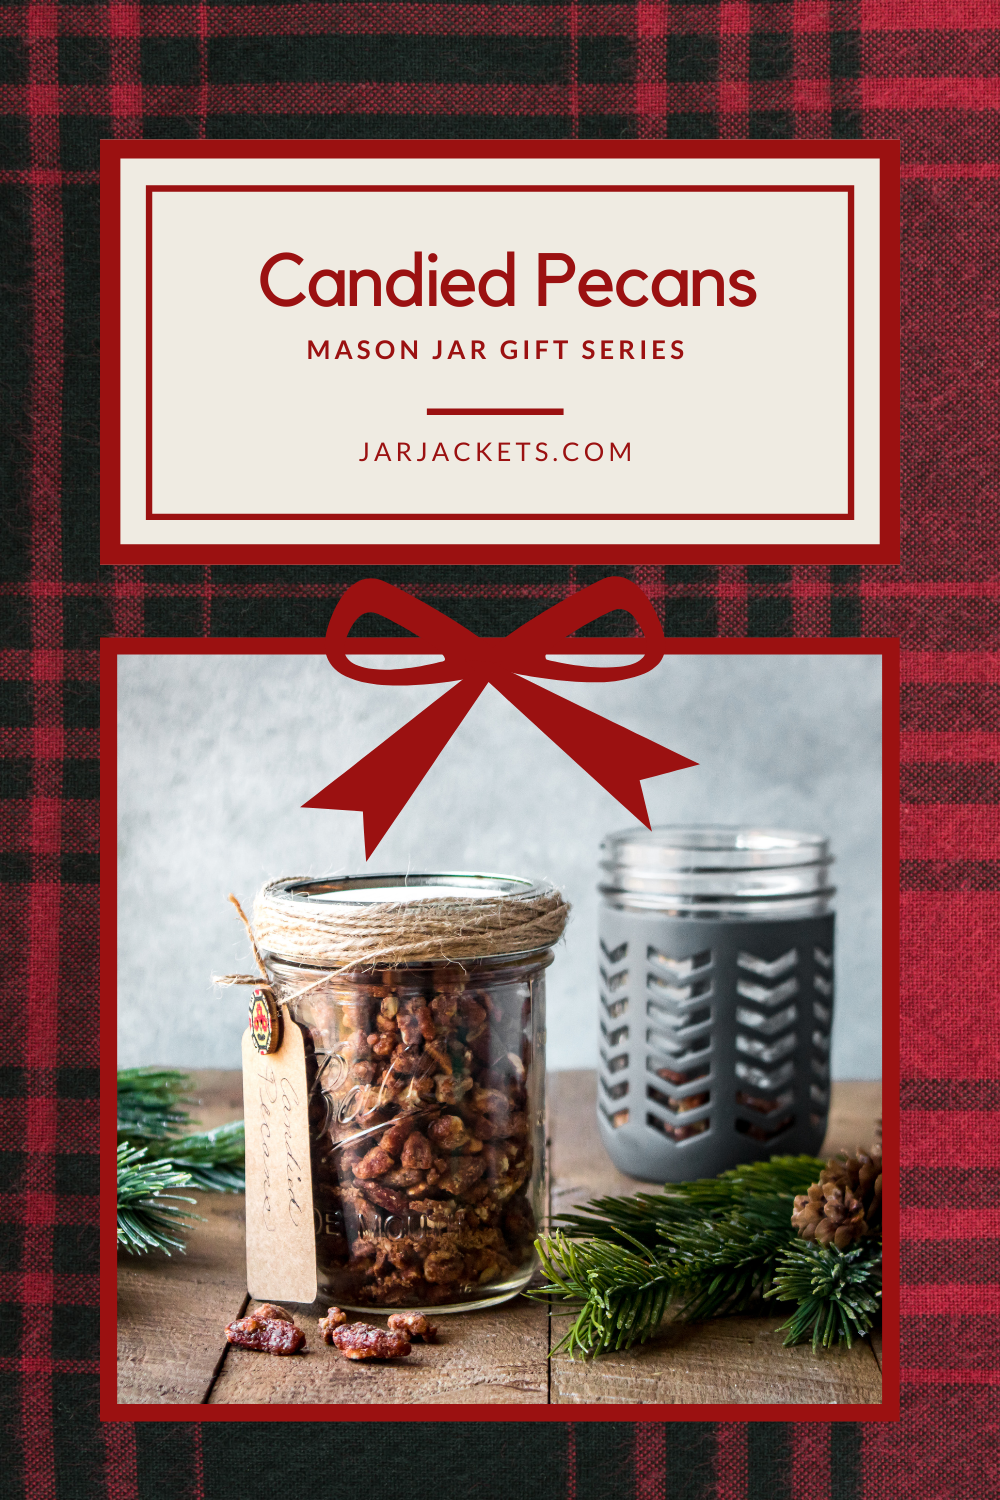 Mason jar gift - candied pecans